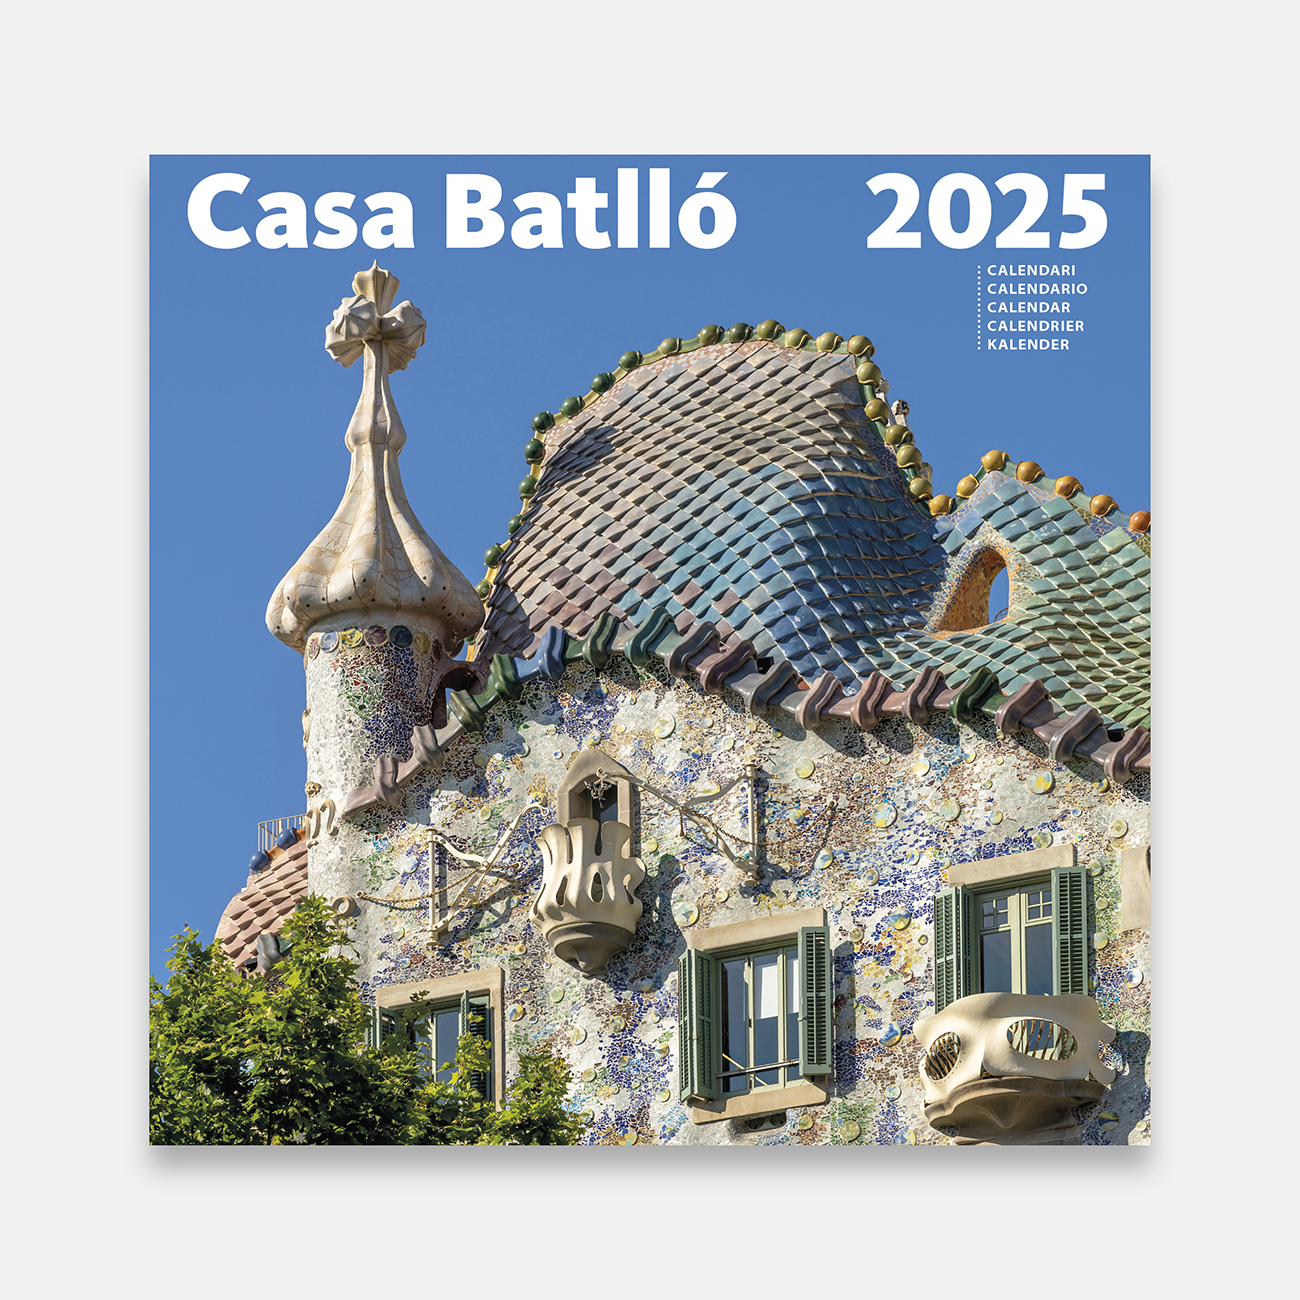 Calendari 2025 Casa Batlló 25cb calendario pared 2025 gaudi casa batllo